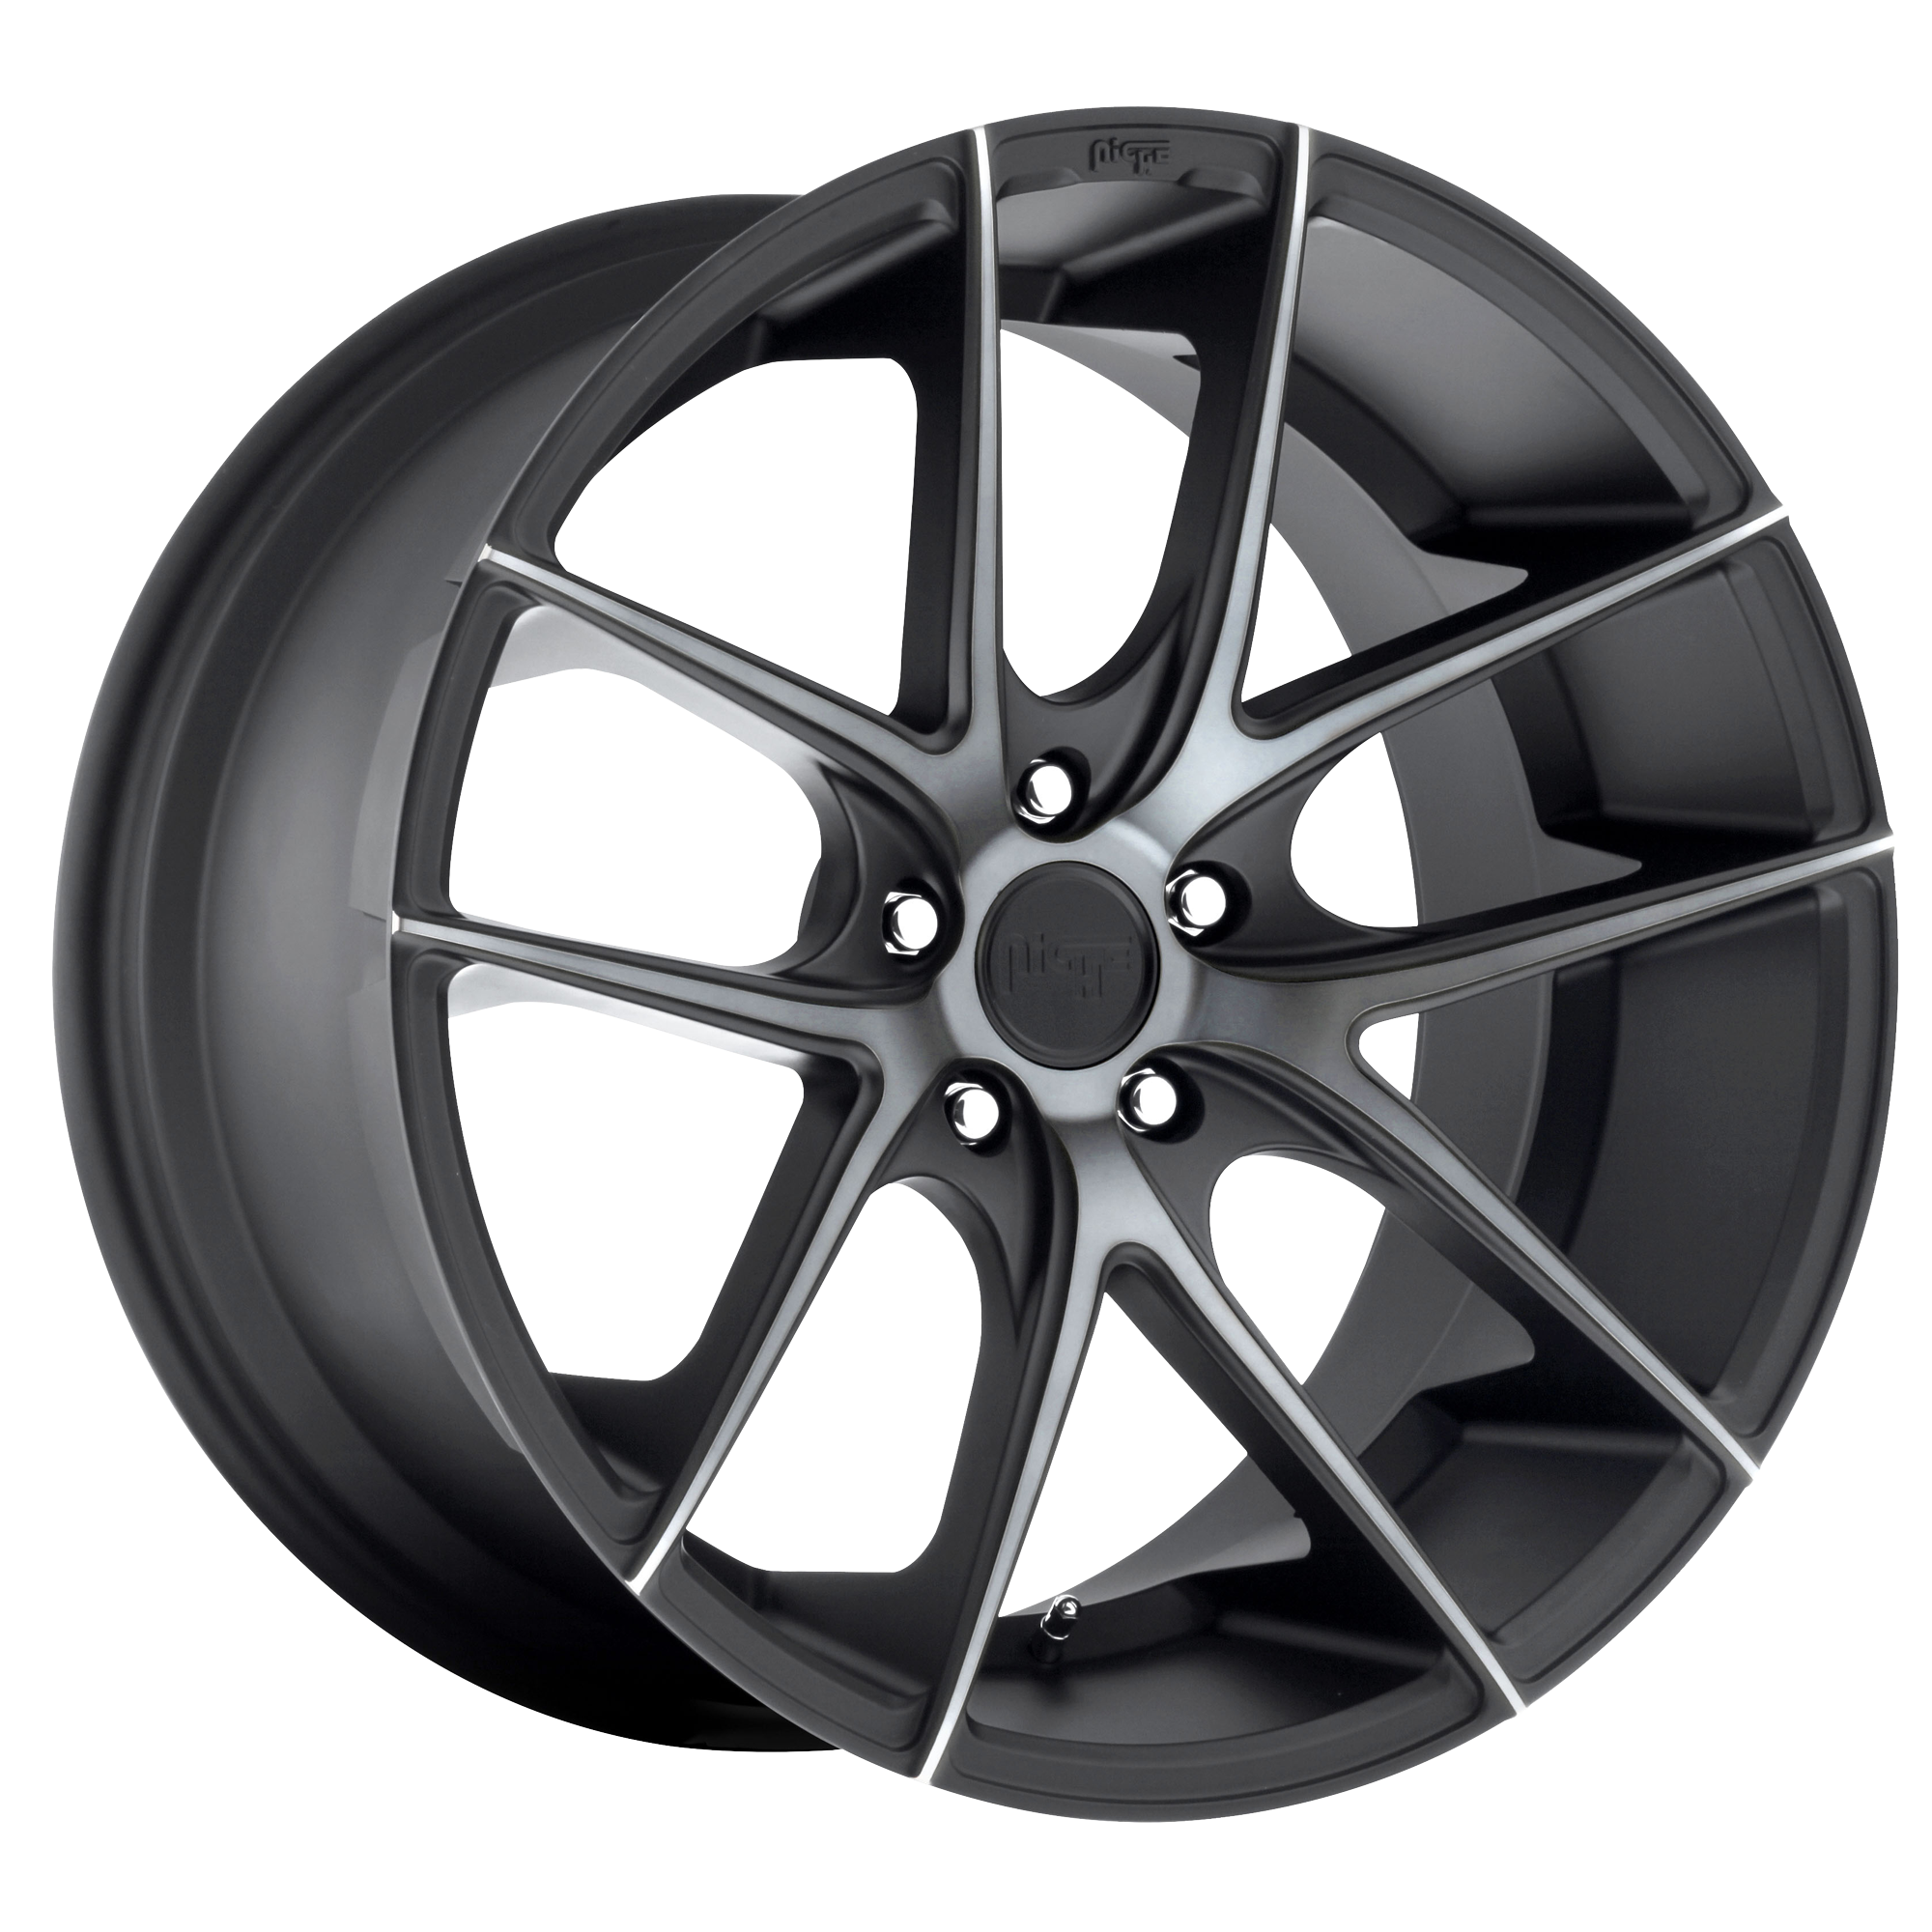 TARGA 18x8 5x114.30 MATTE BLACK DOUBLE DARK TINT (40 mm) - Tires and Engine Performance